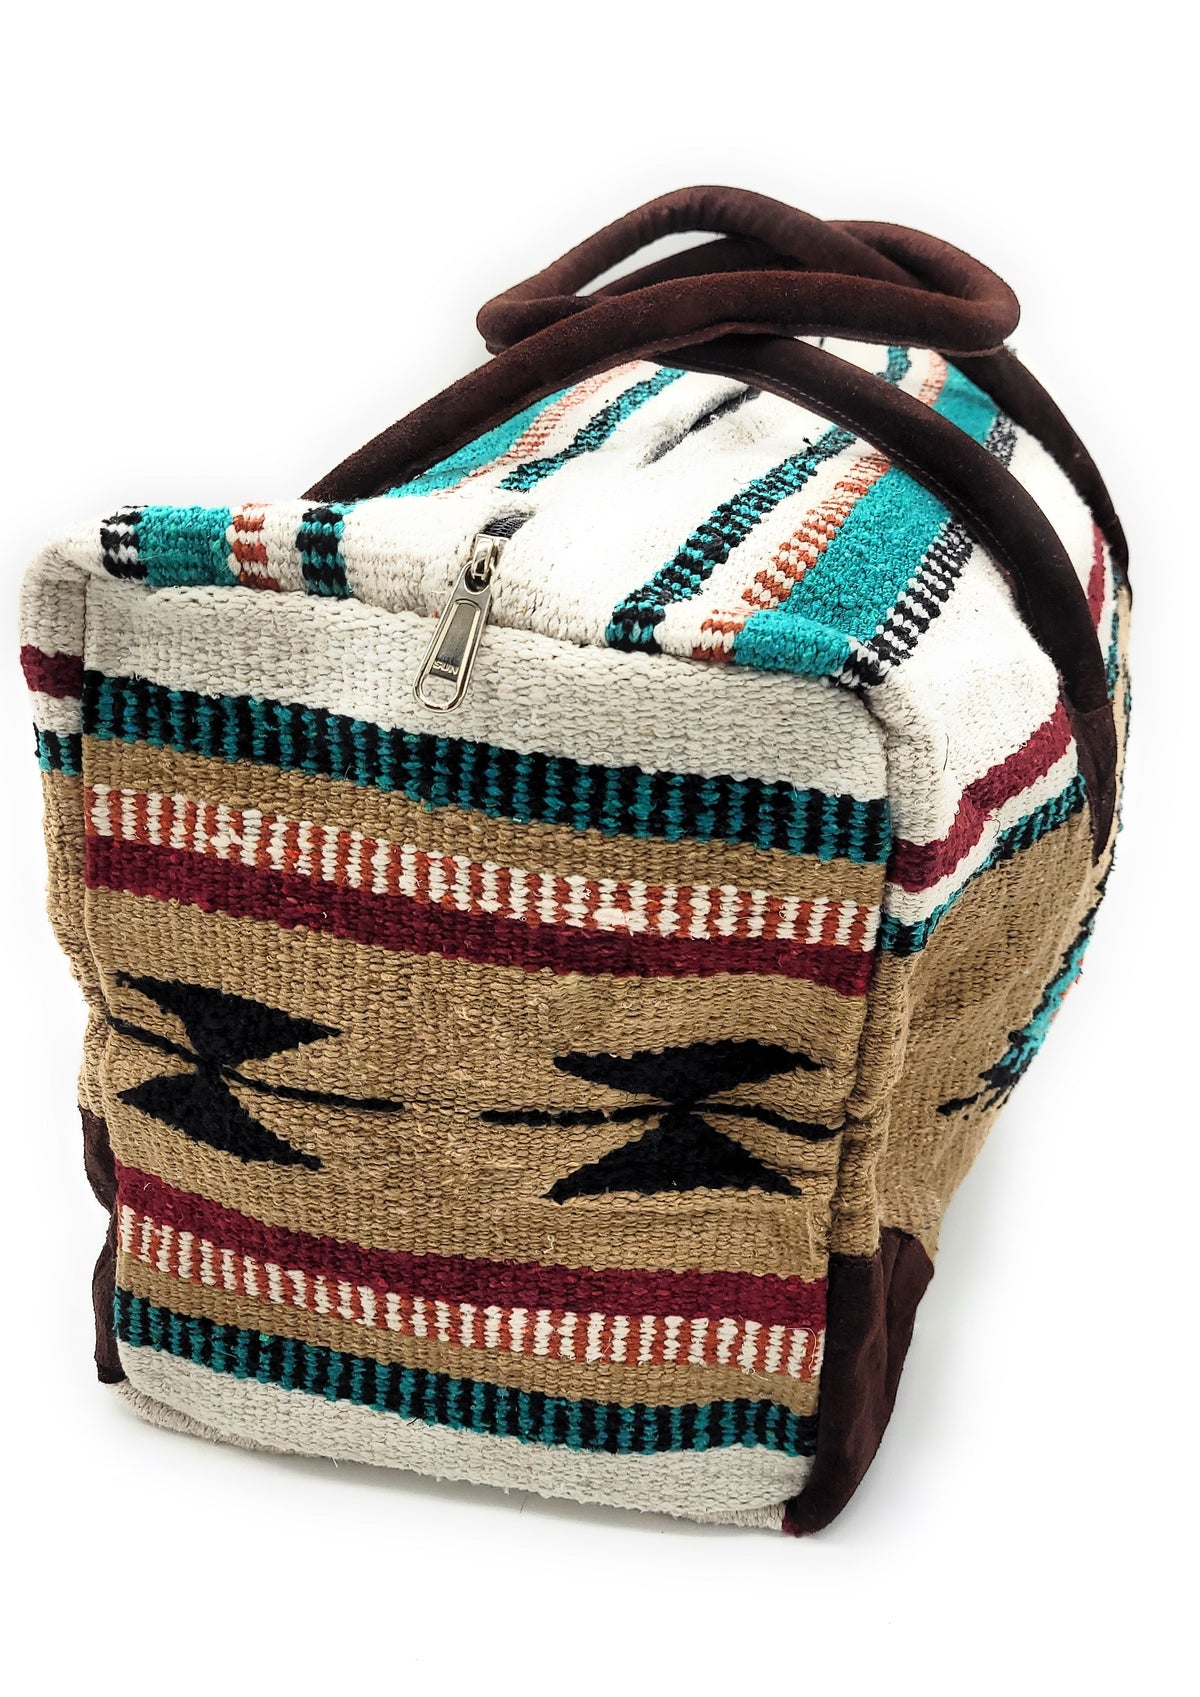 Southwestern Large Weekender Travel Bag Duffle Bag Boho Travel Bag- Th ...